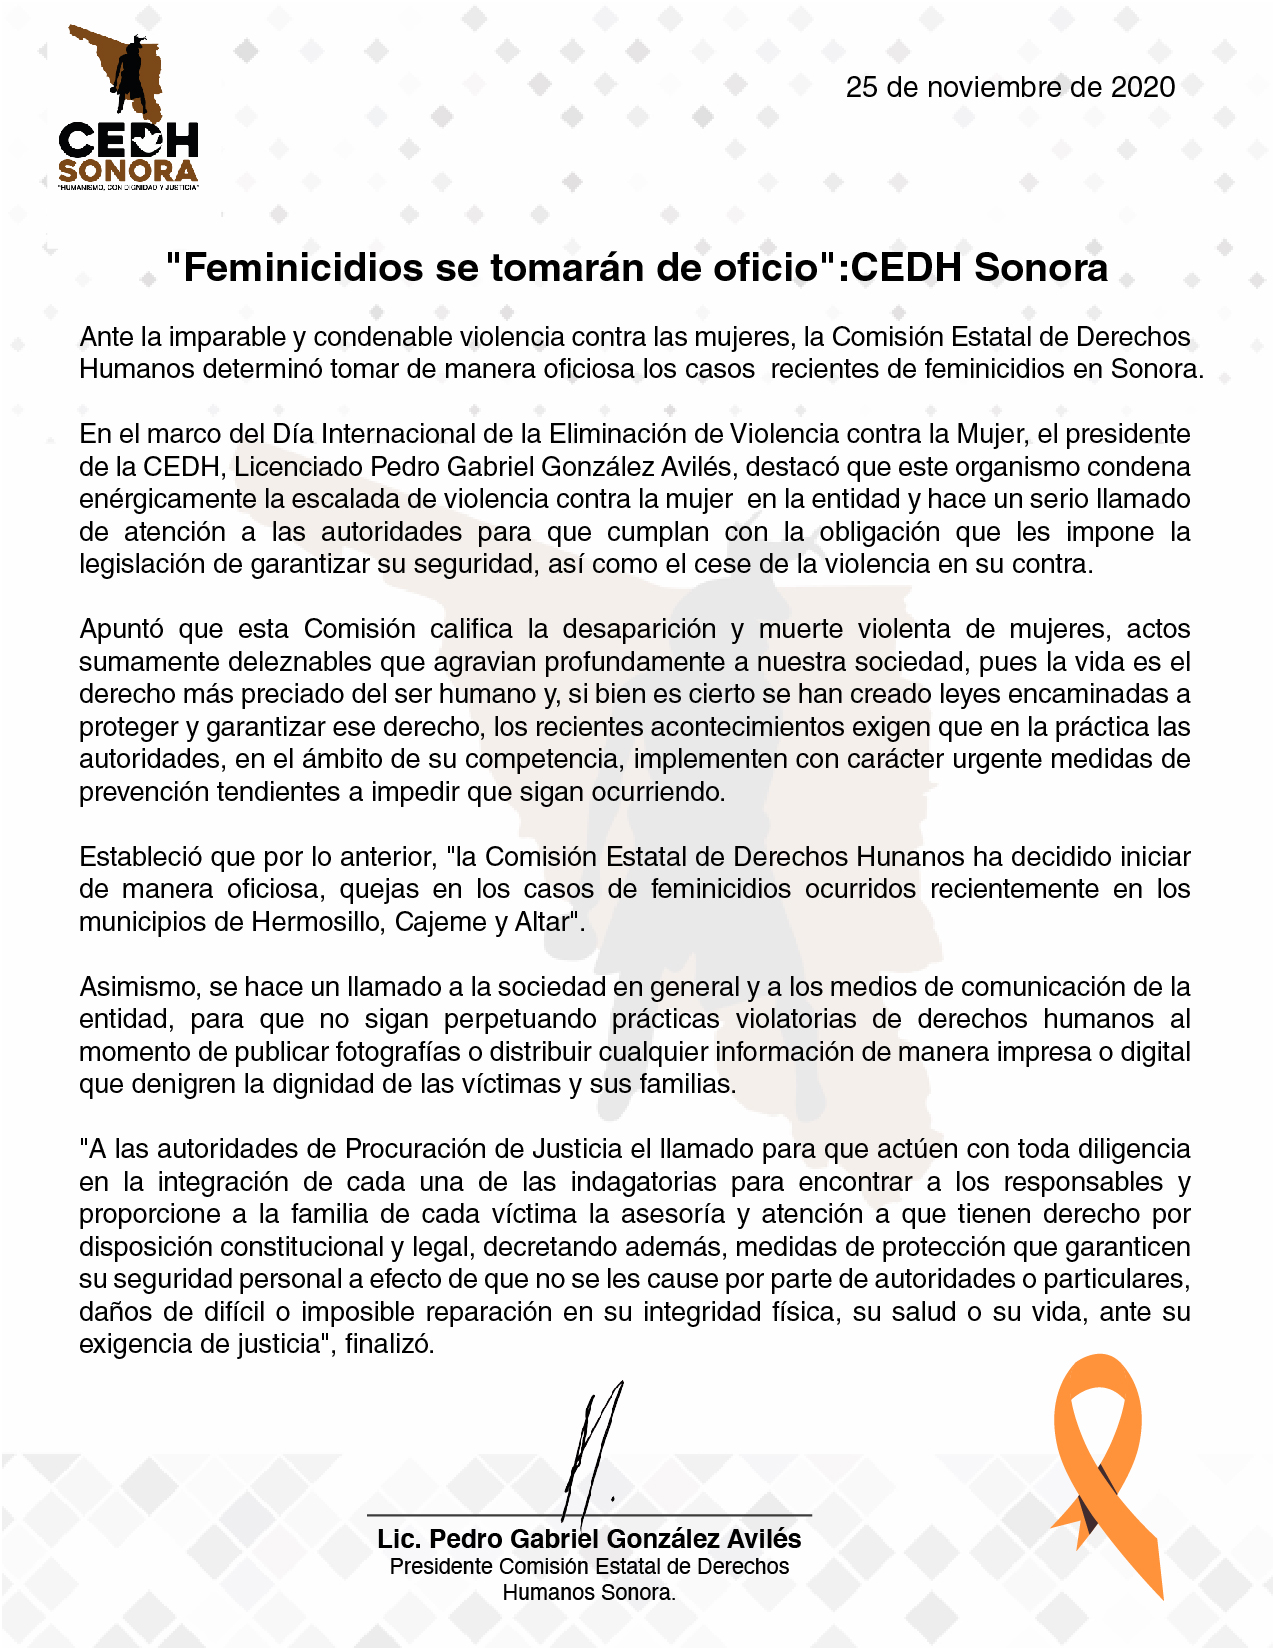 "Feminicidios se tomarán de oficio": CEDH Sonora